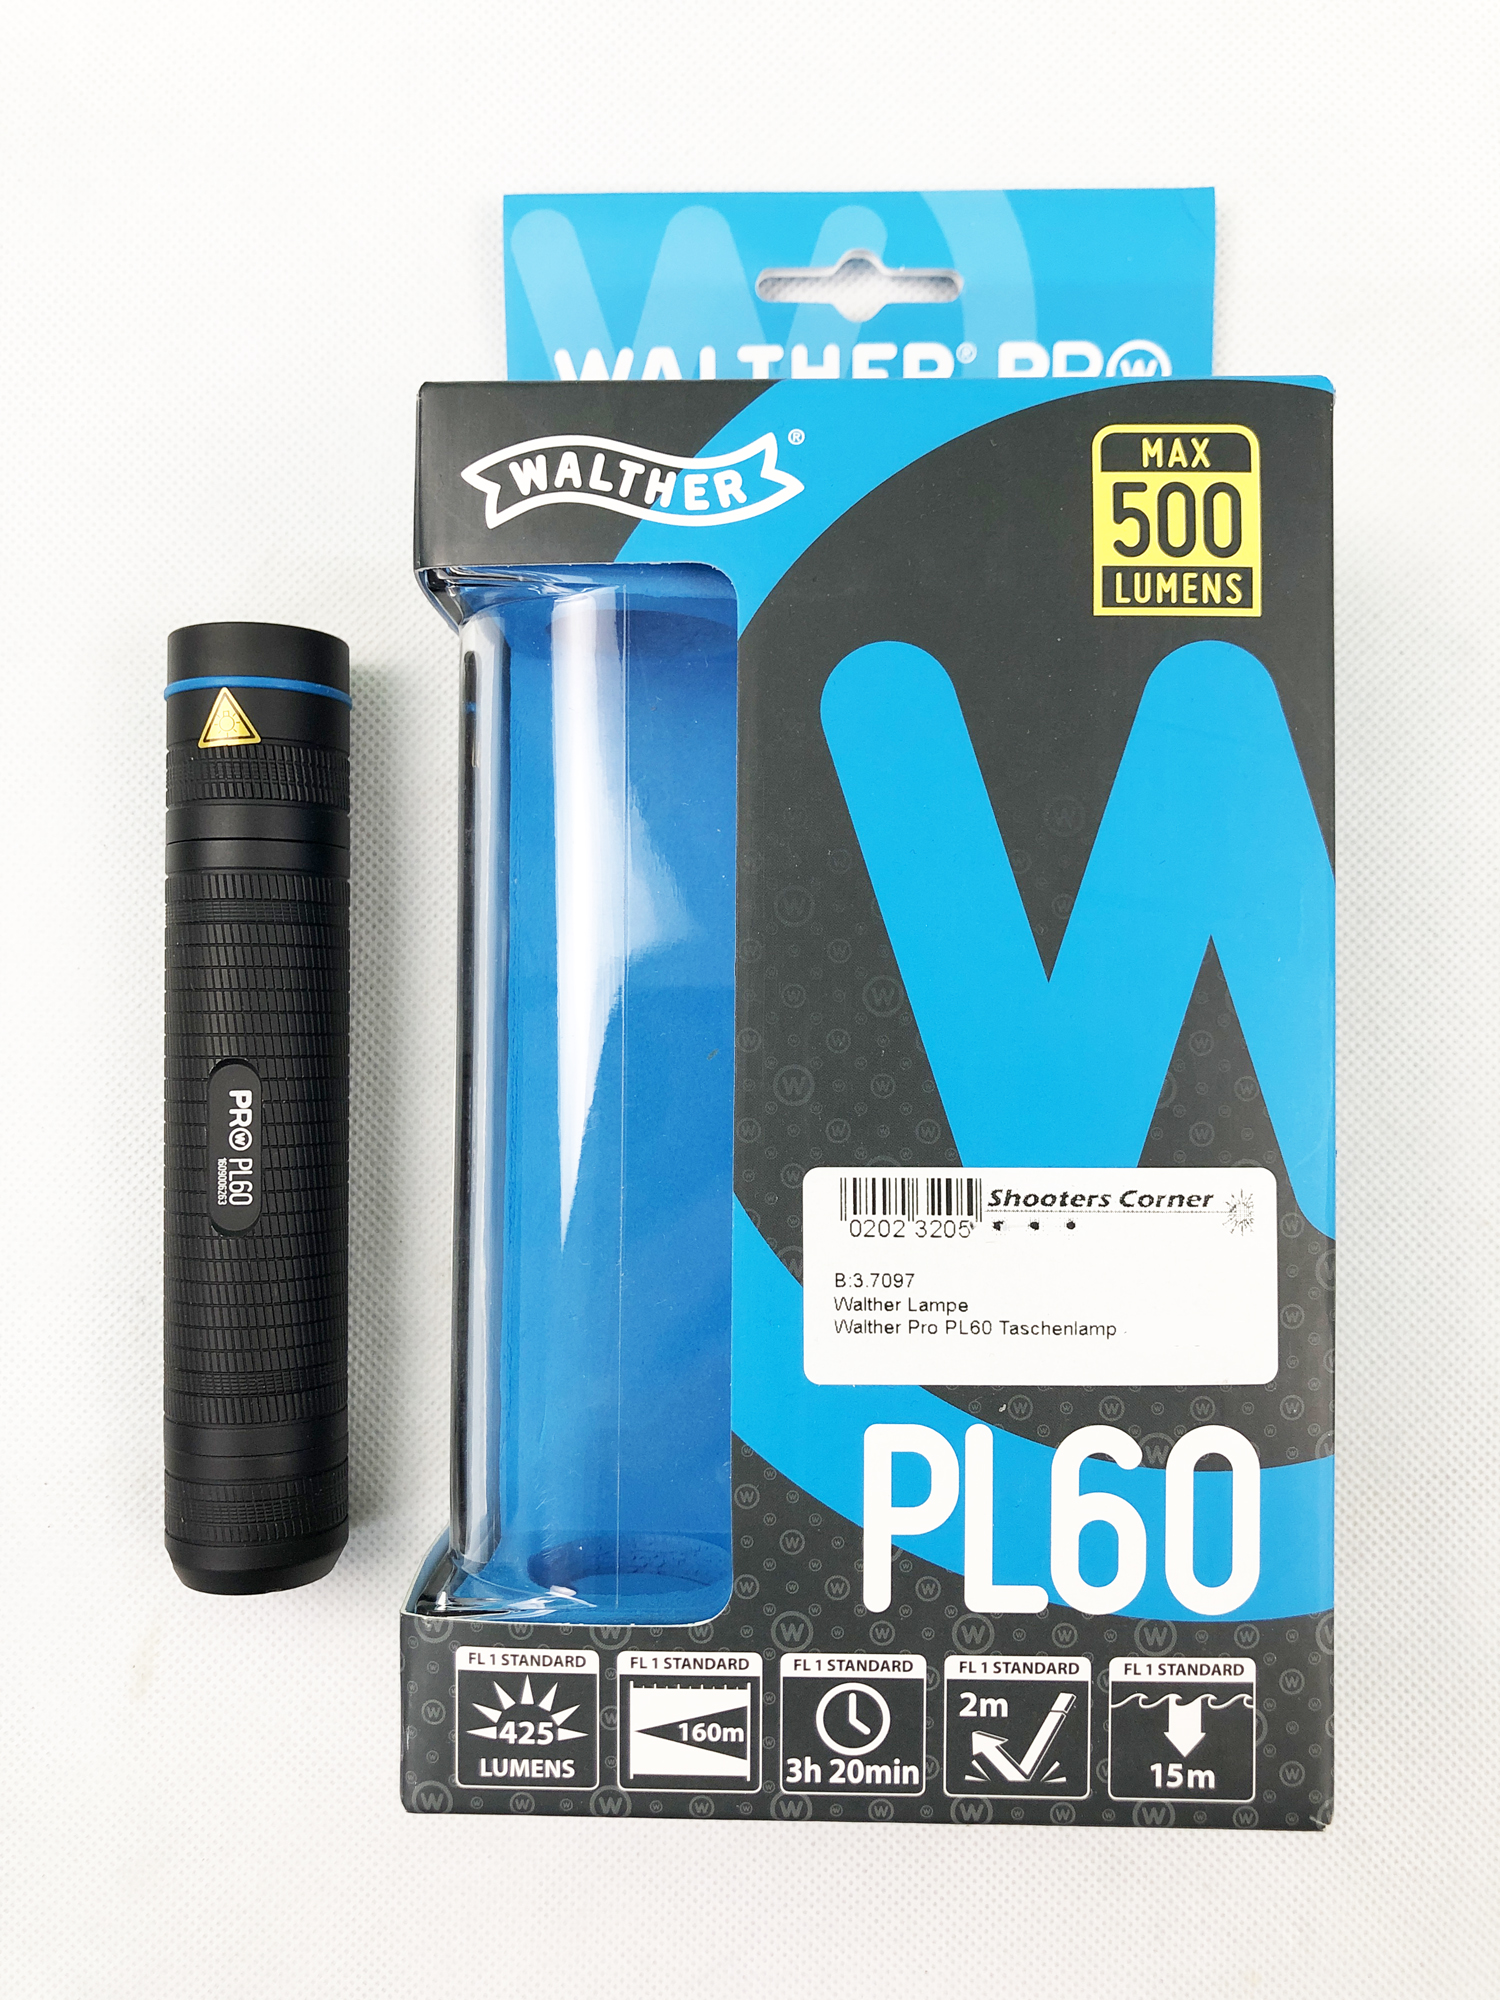  Walther Taschenlampe Pro PL60